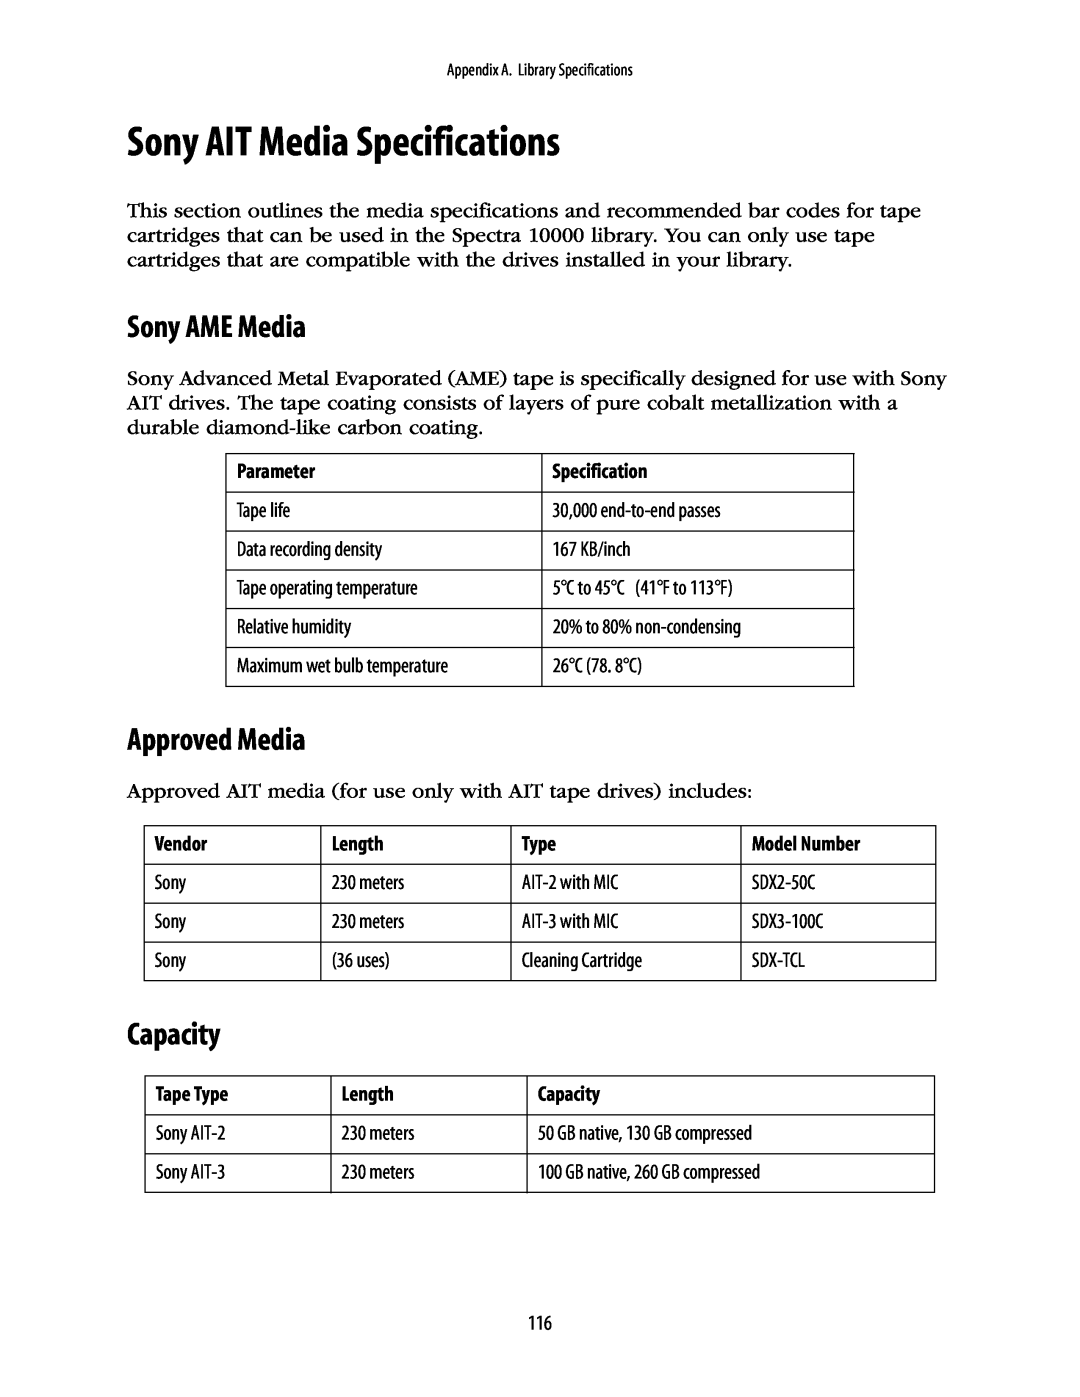 Spectra Logic 10000 manual Sony AIT Media Specifications, Sony AME Media, Approved Media, Capacity 